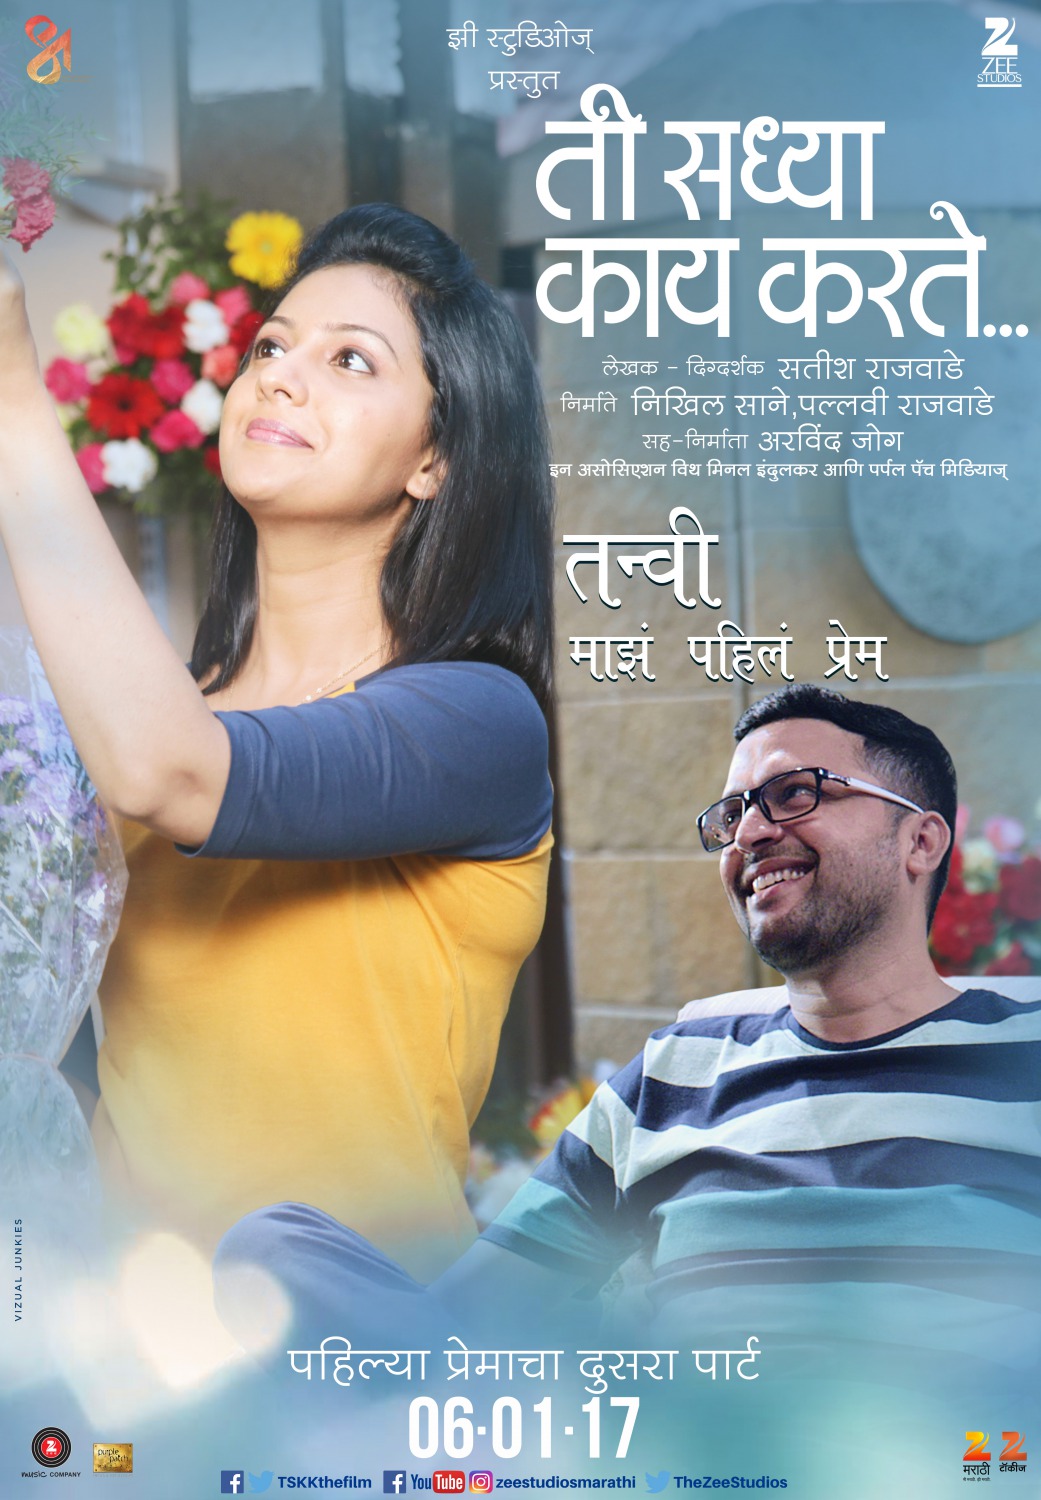 Extra Large Movie Poster Image for Ti Saddhya Kay Karte (#10 of 10)